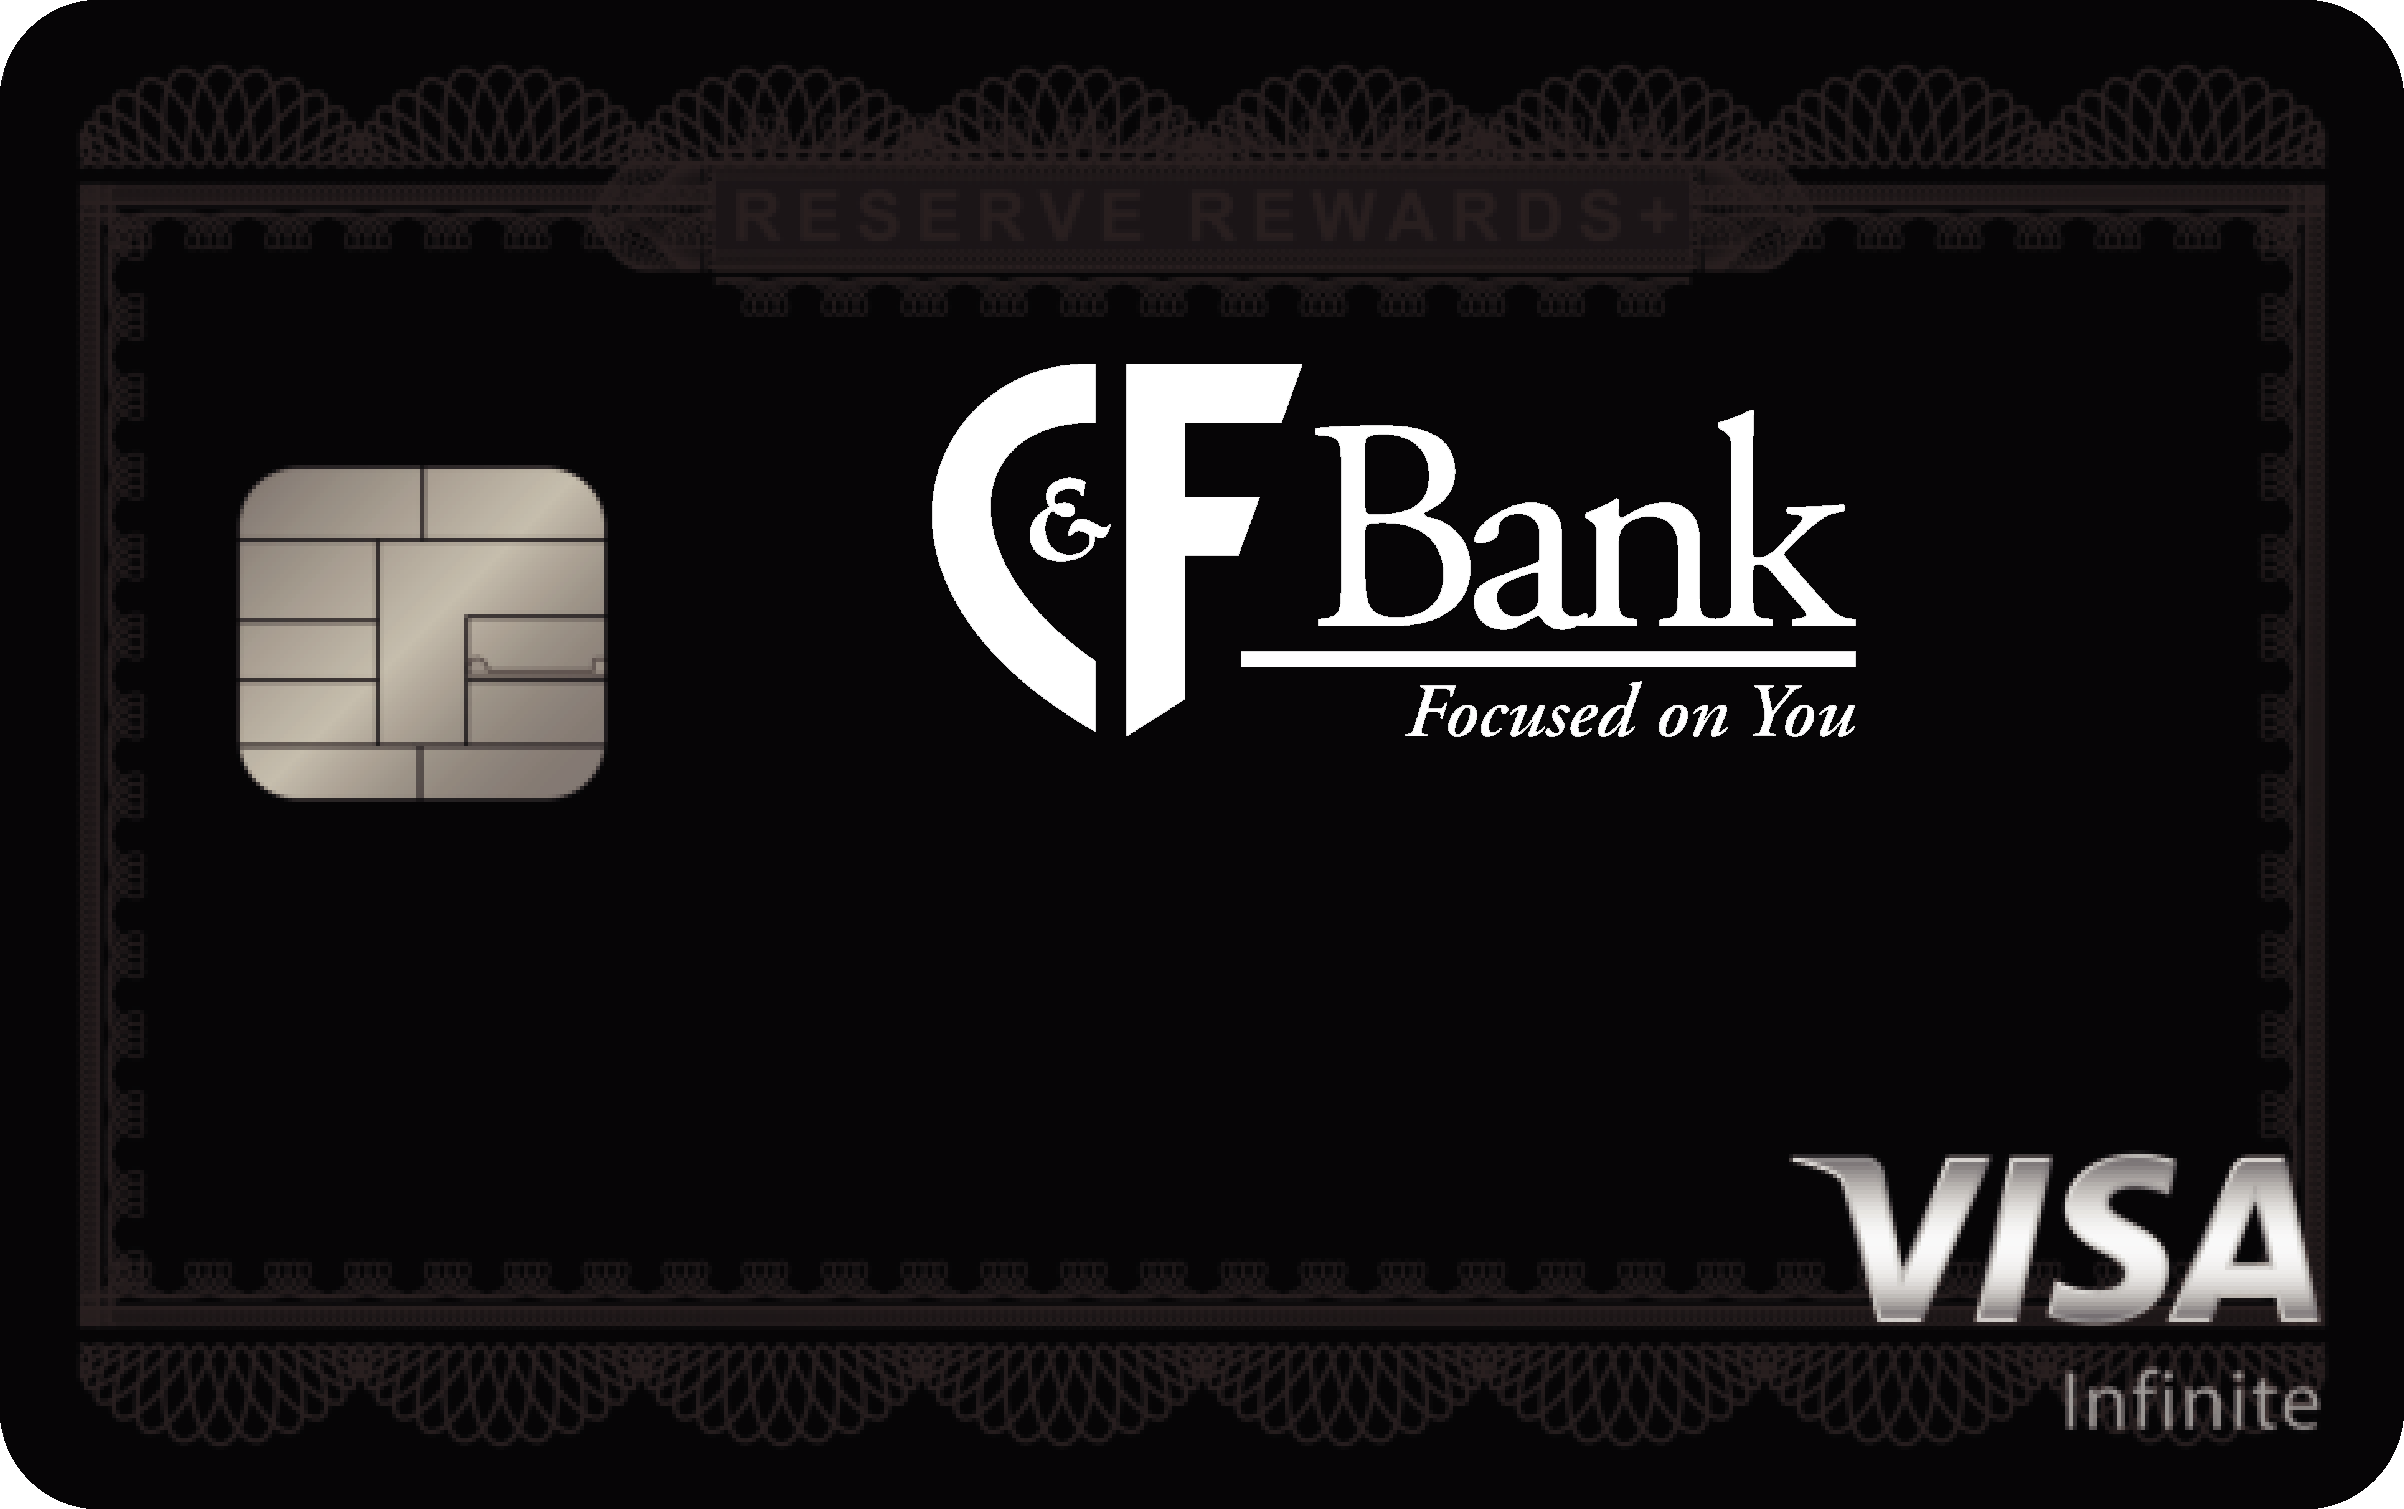 C&F Bank Reserve Rewards+ Card